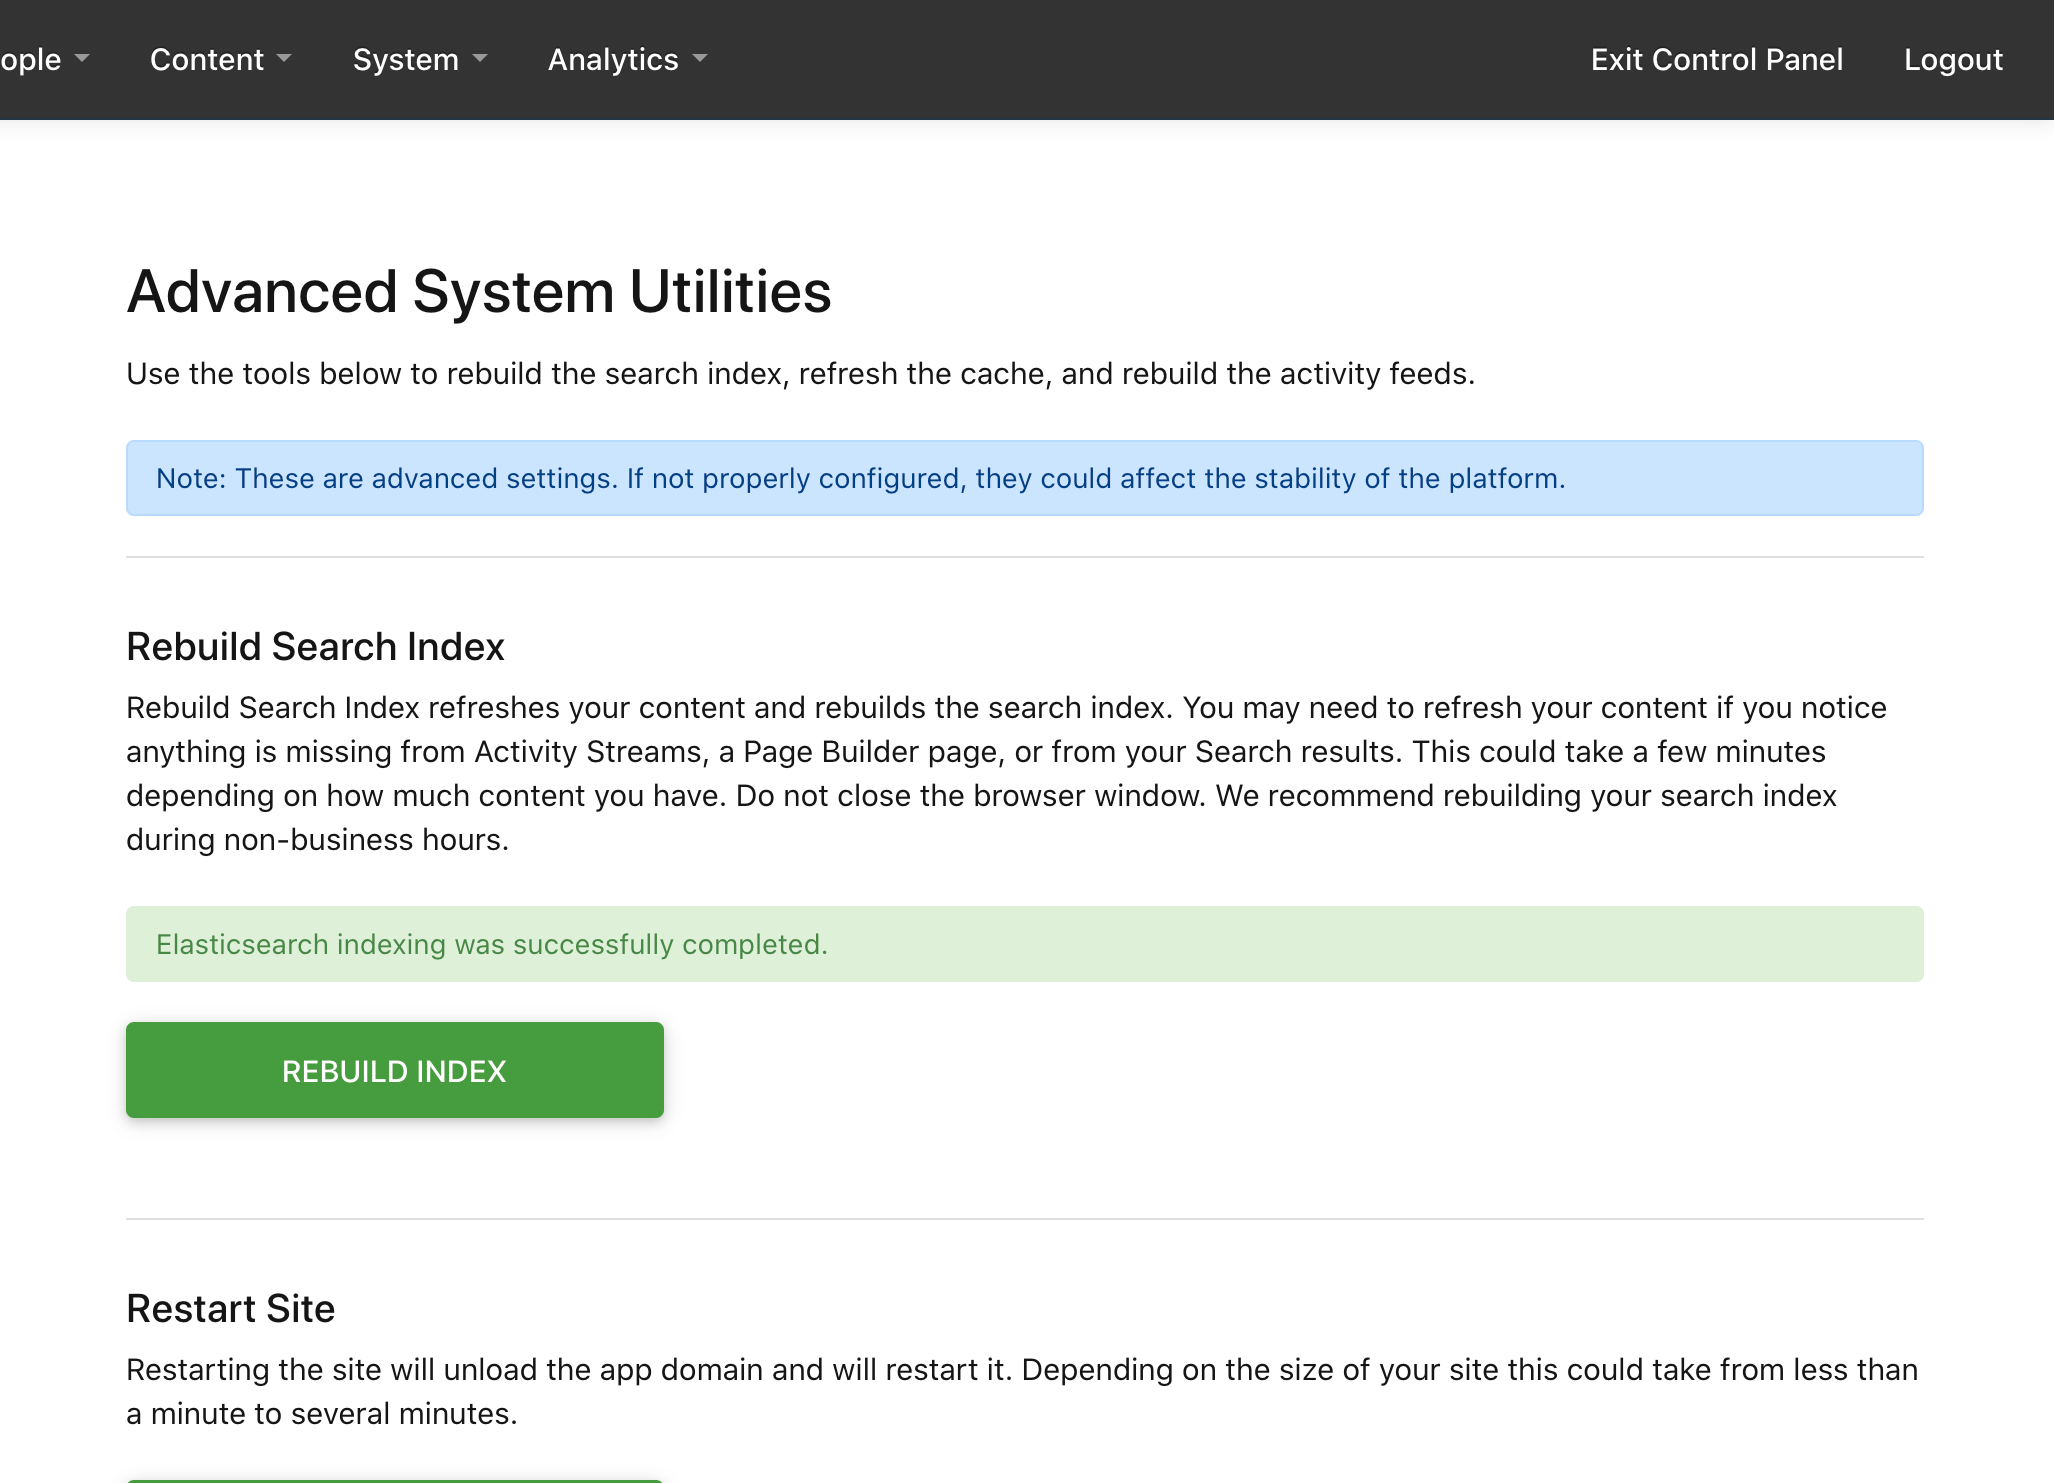 Advanced System Utilities